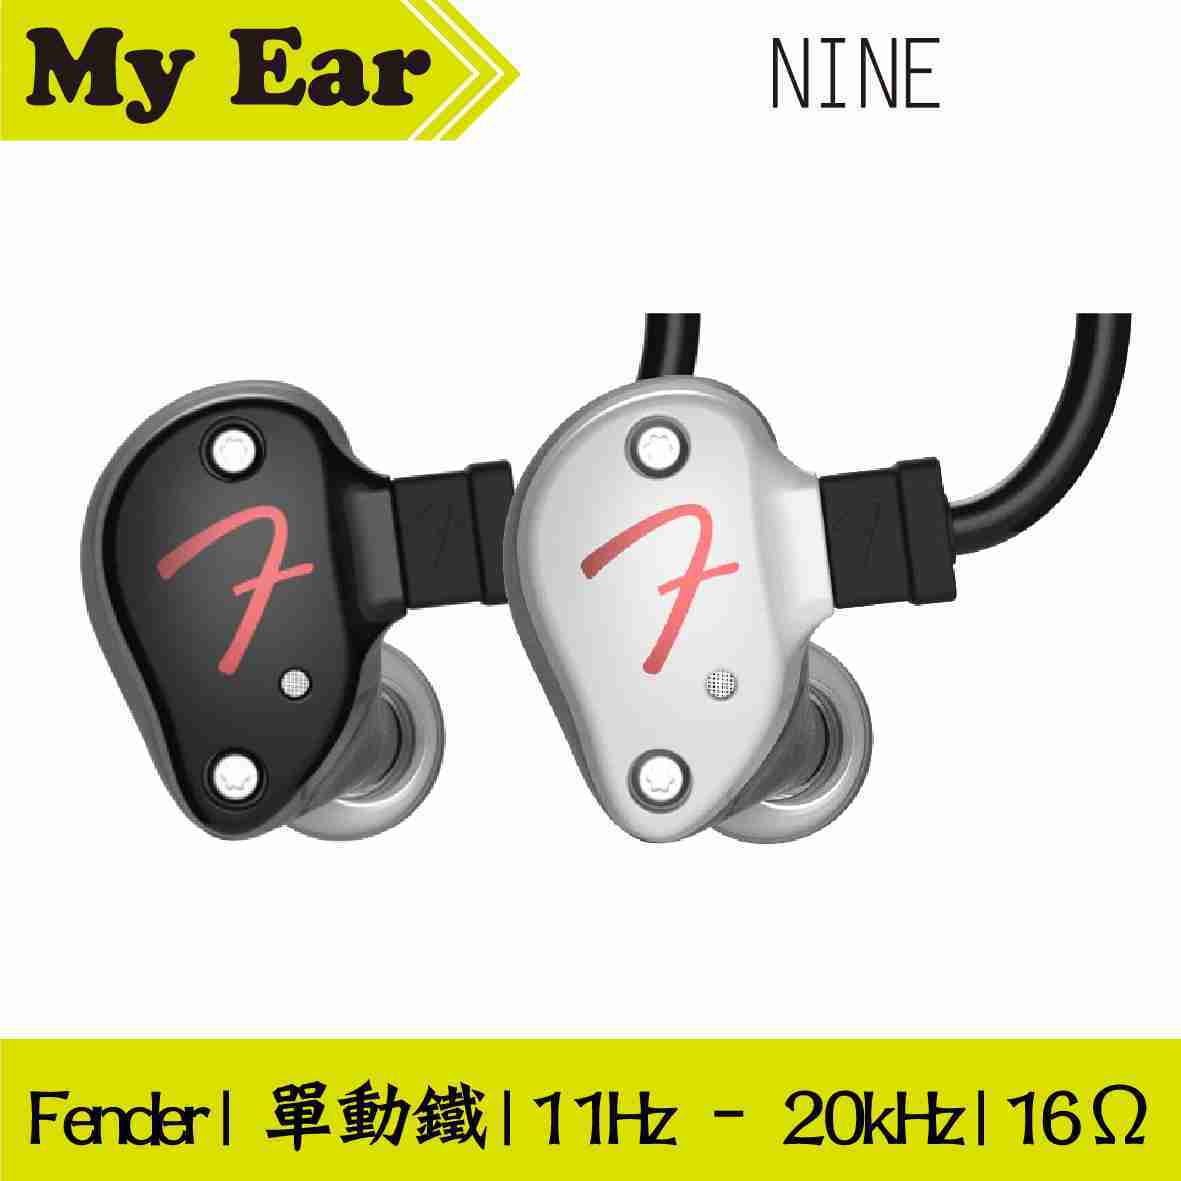 Fender NINE 黑色 耳道式 監聽 耳機 Pro IEM | My Ear耳機專門店